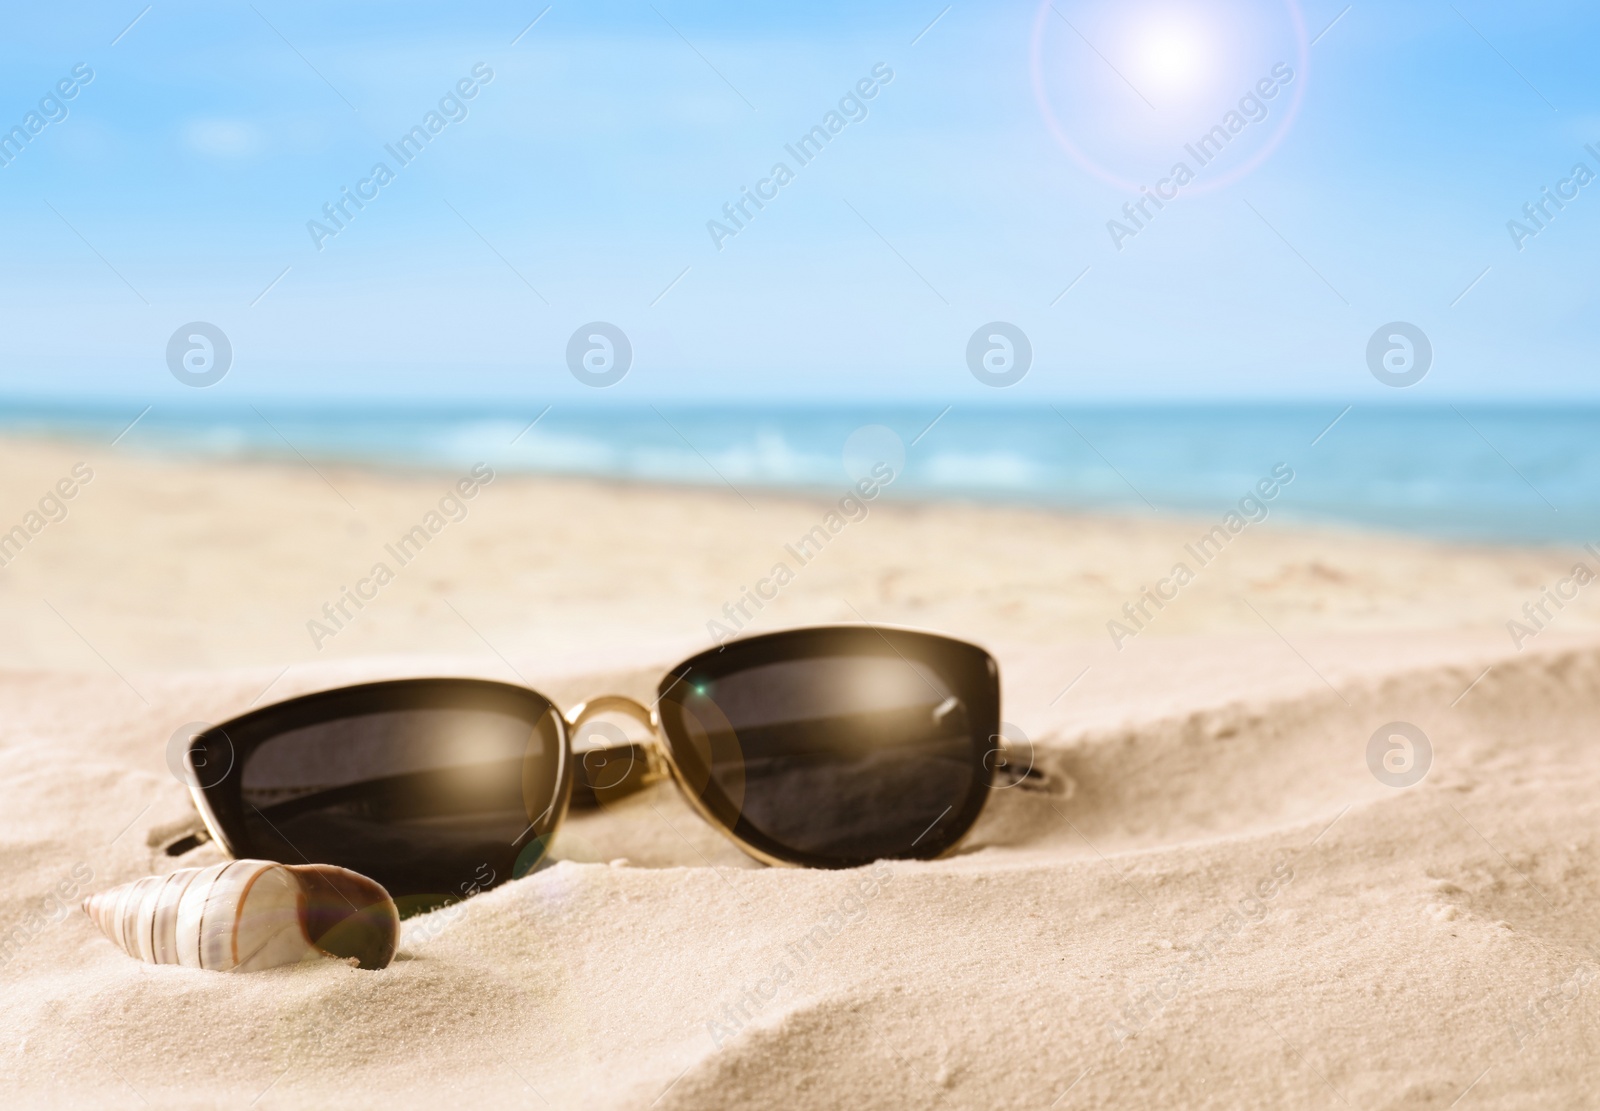 Image of Shell and stylish sunglasses on sandy beach near sea